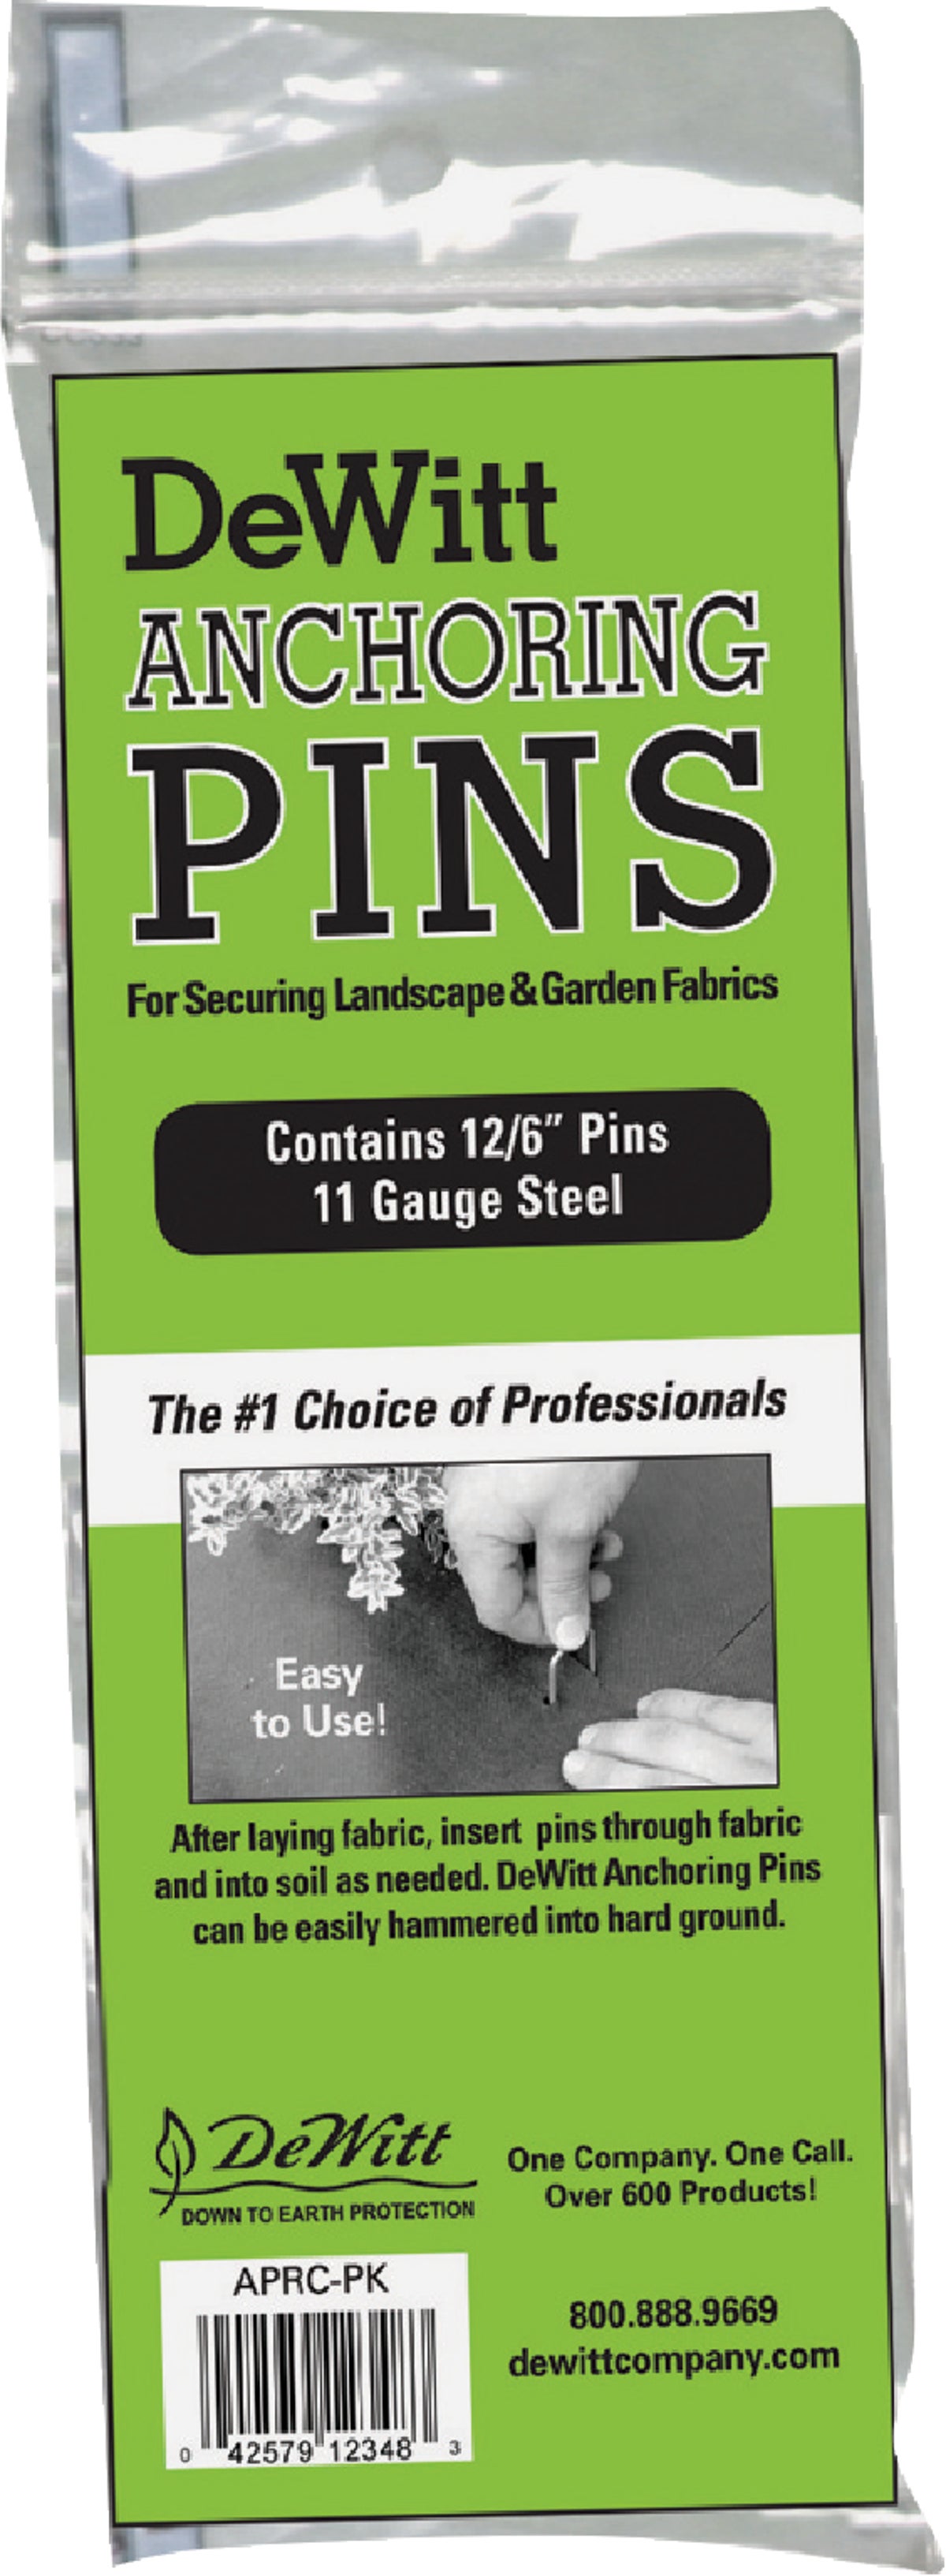 Master Gardner Steel 4.5 In. Landscape Fabric Pins (75-Pack